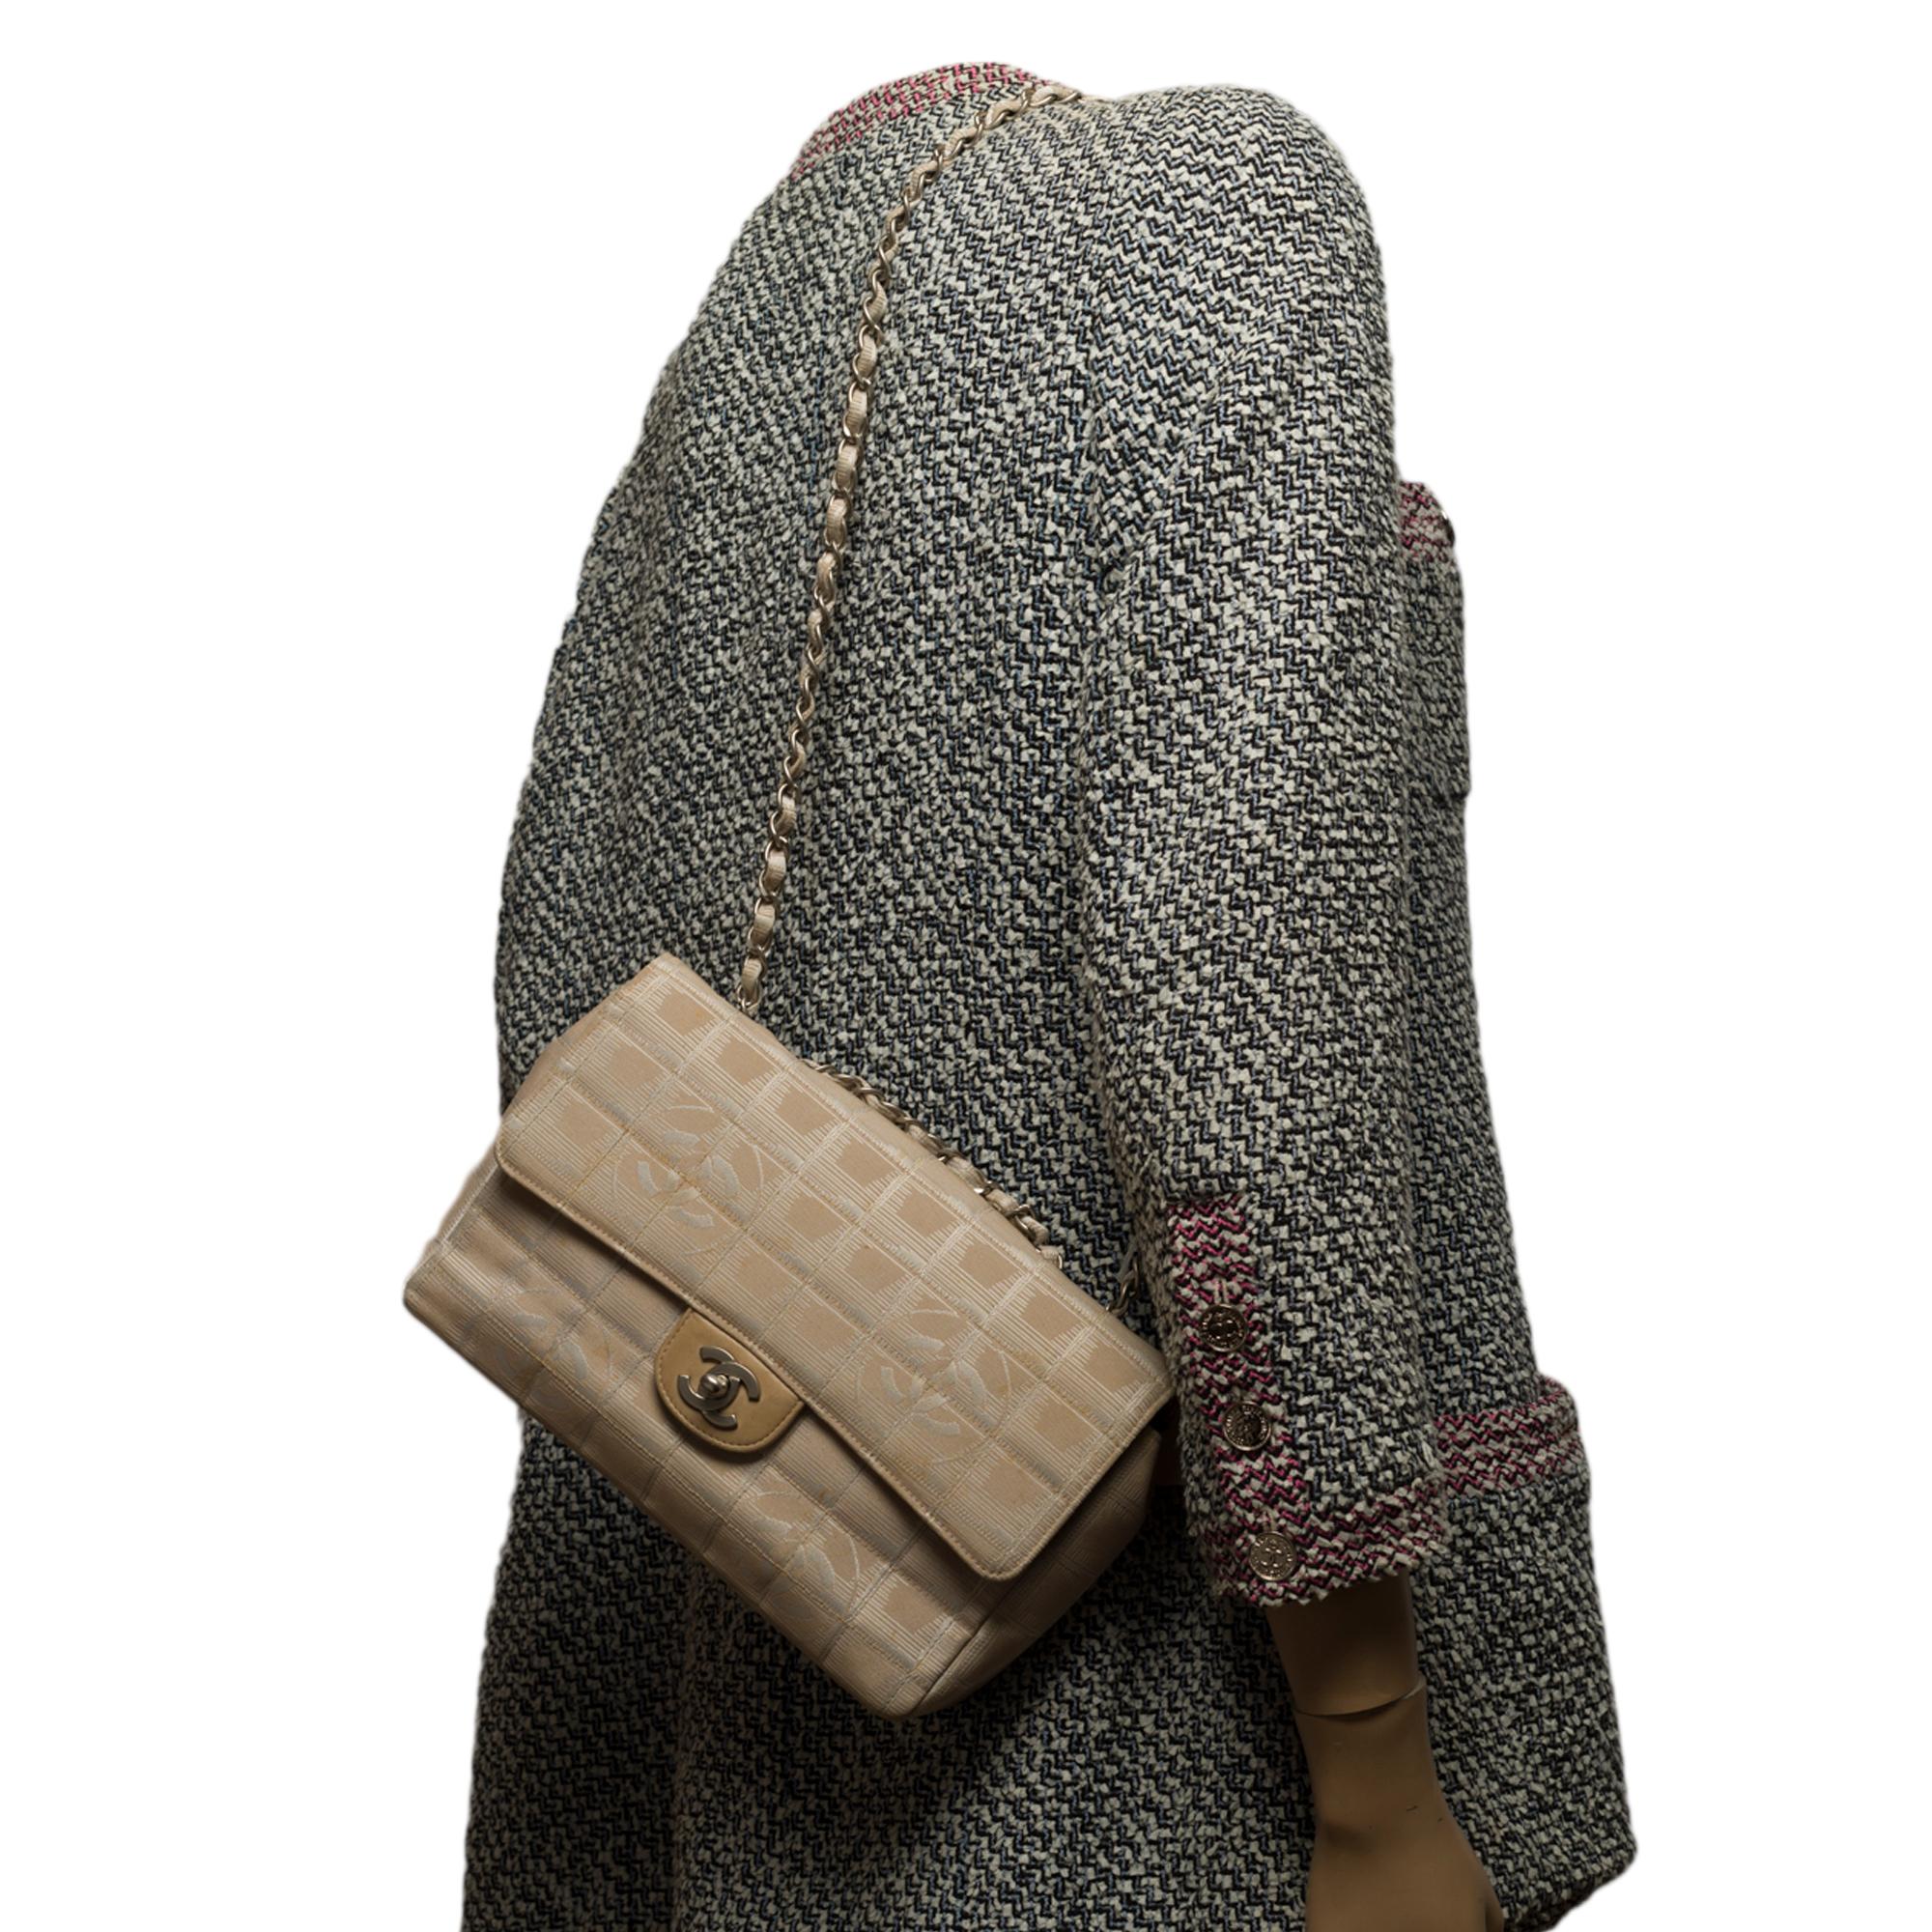 Chanel Timeless Travel Line flap shoulder bag in beige woven nylon, SHW 4